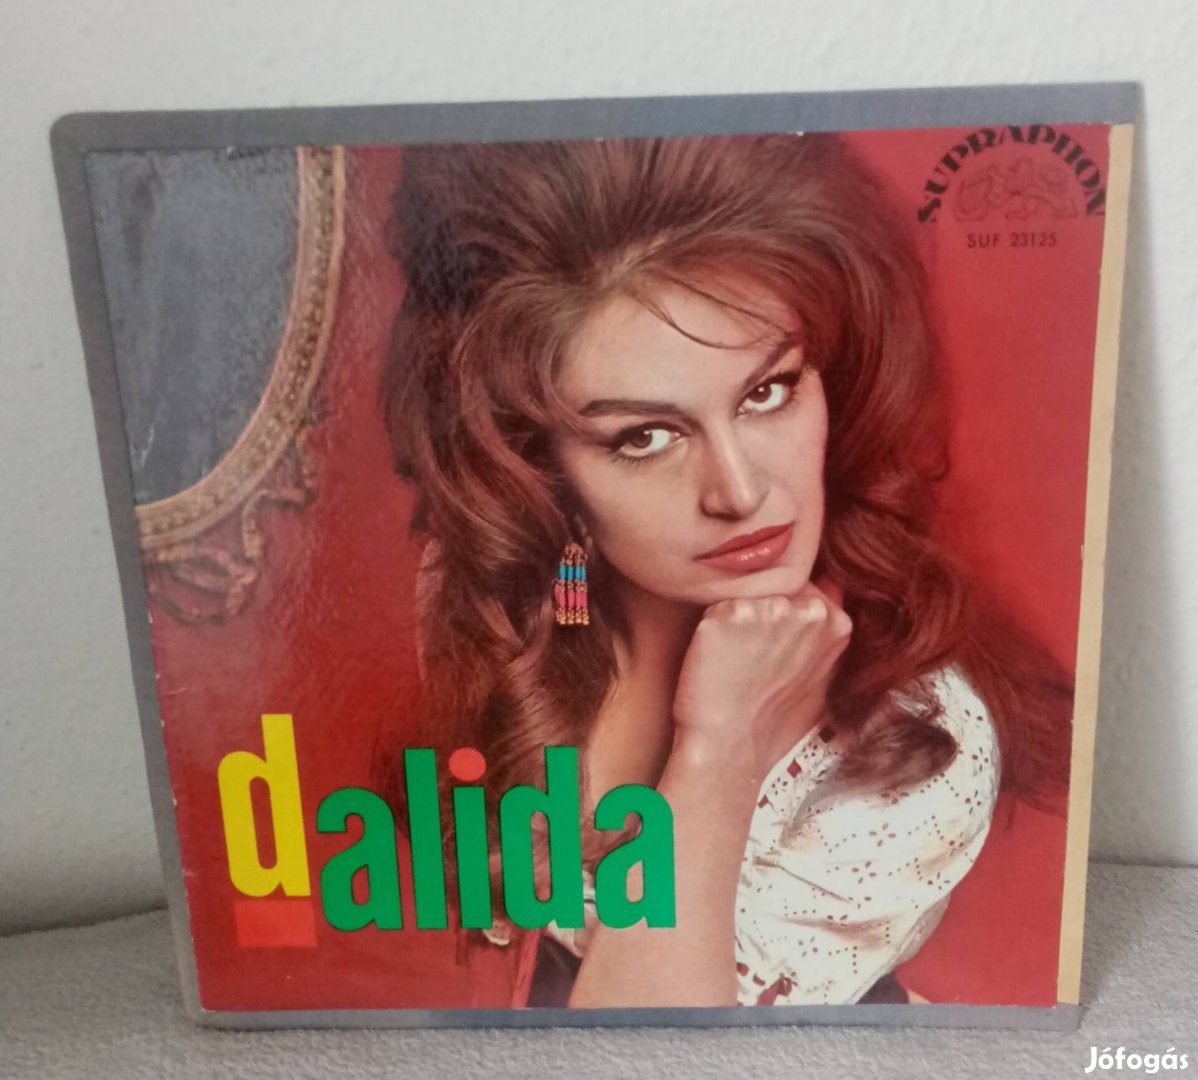 Dalida (1953-as) ritka, bakelit lemez eladó 